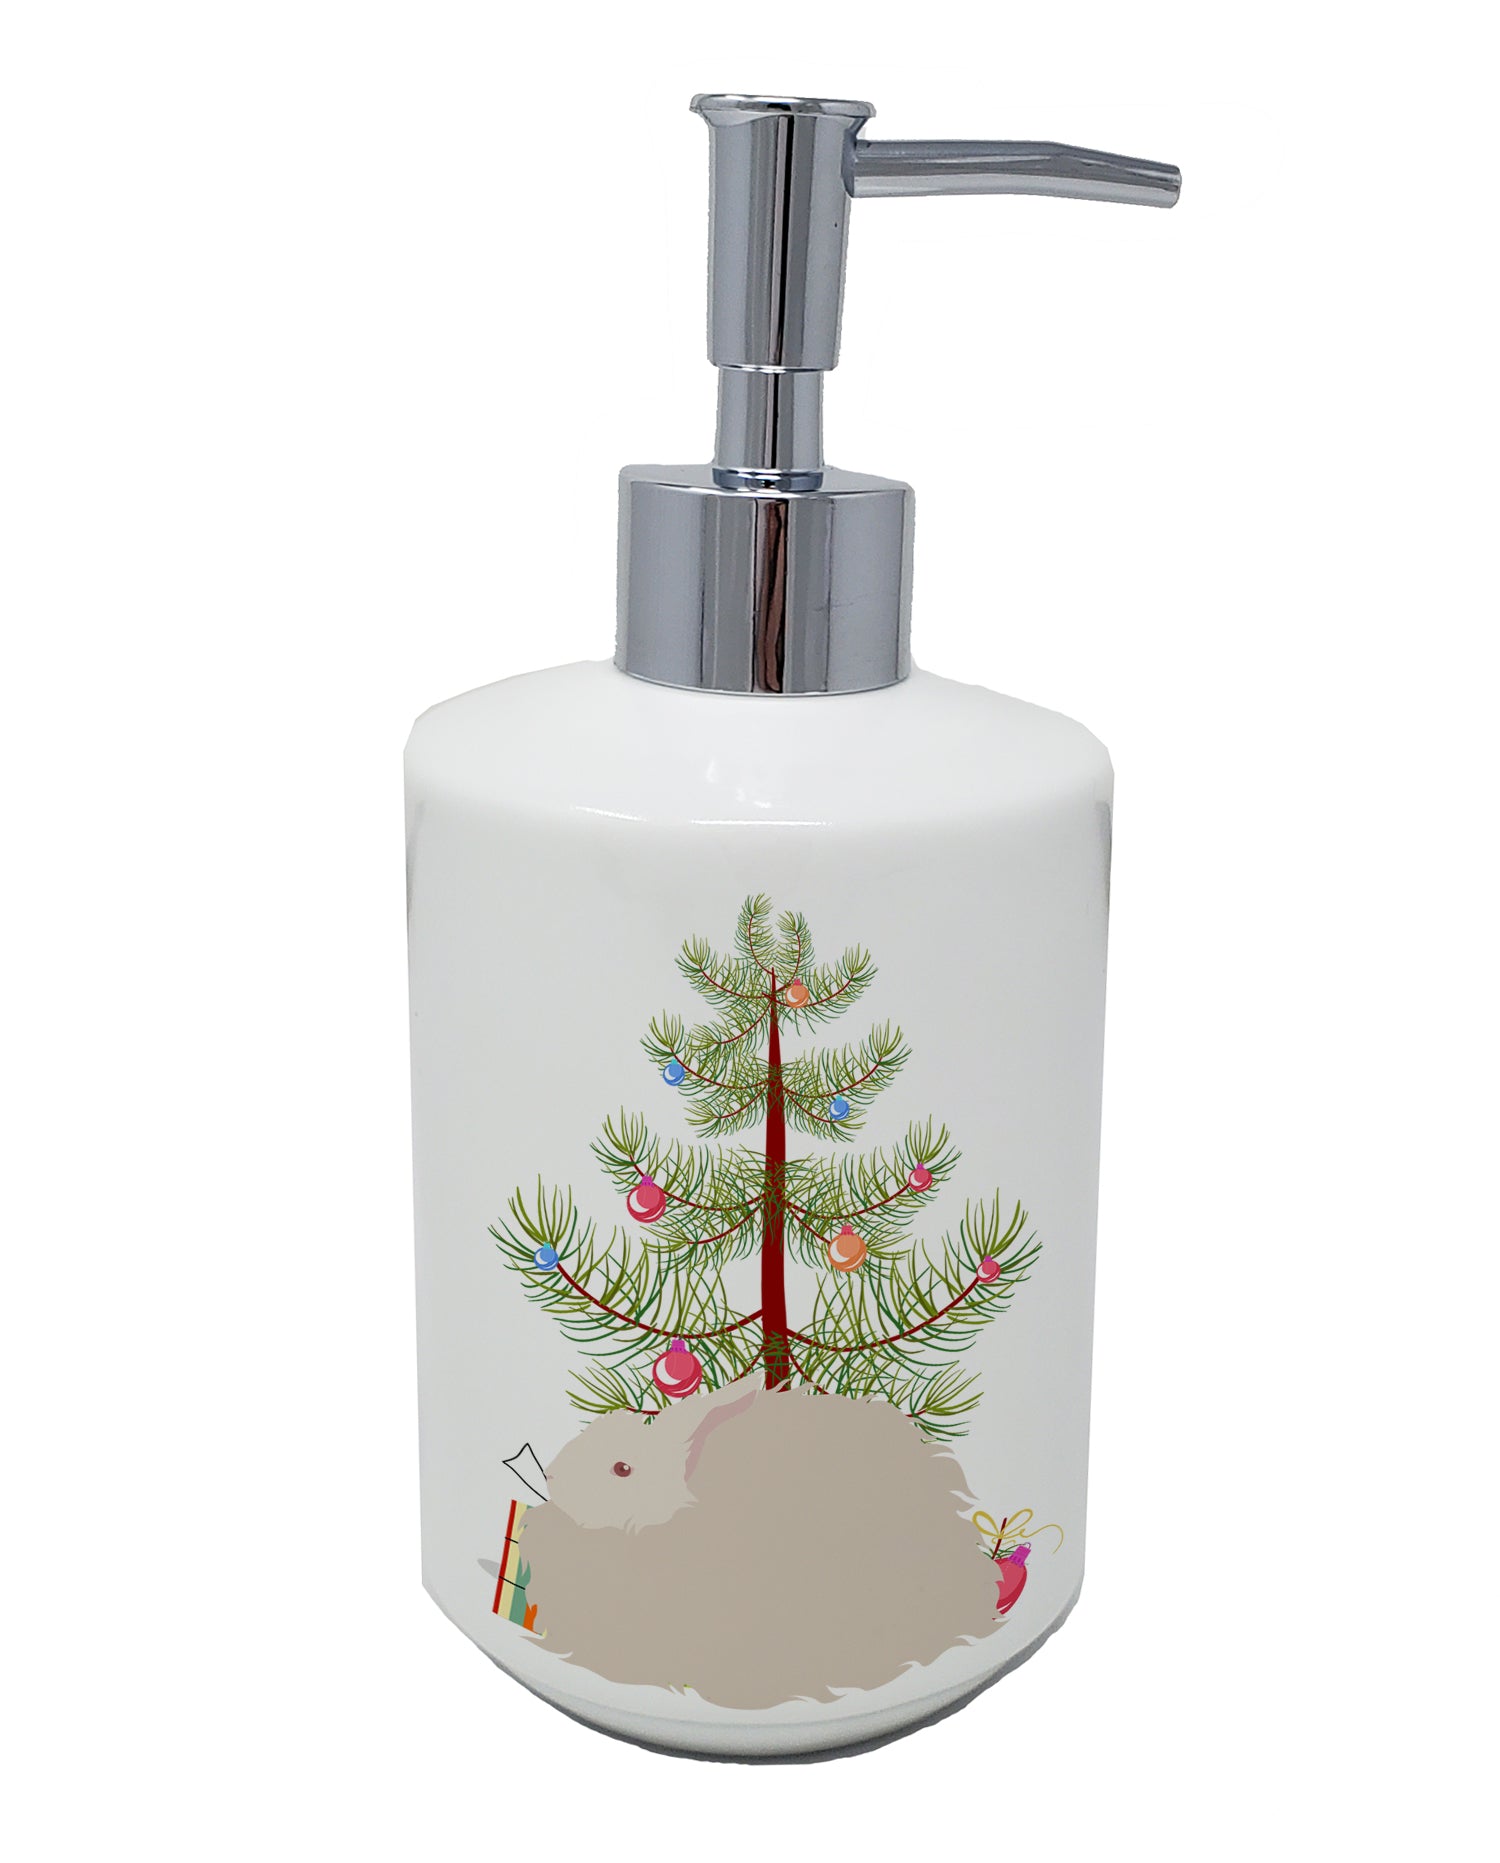 Buy this Fluffy Angora Rabbit Christmas Ceramic Soap Dispenser